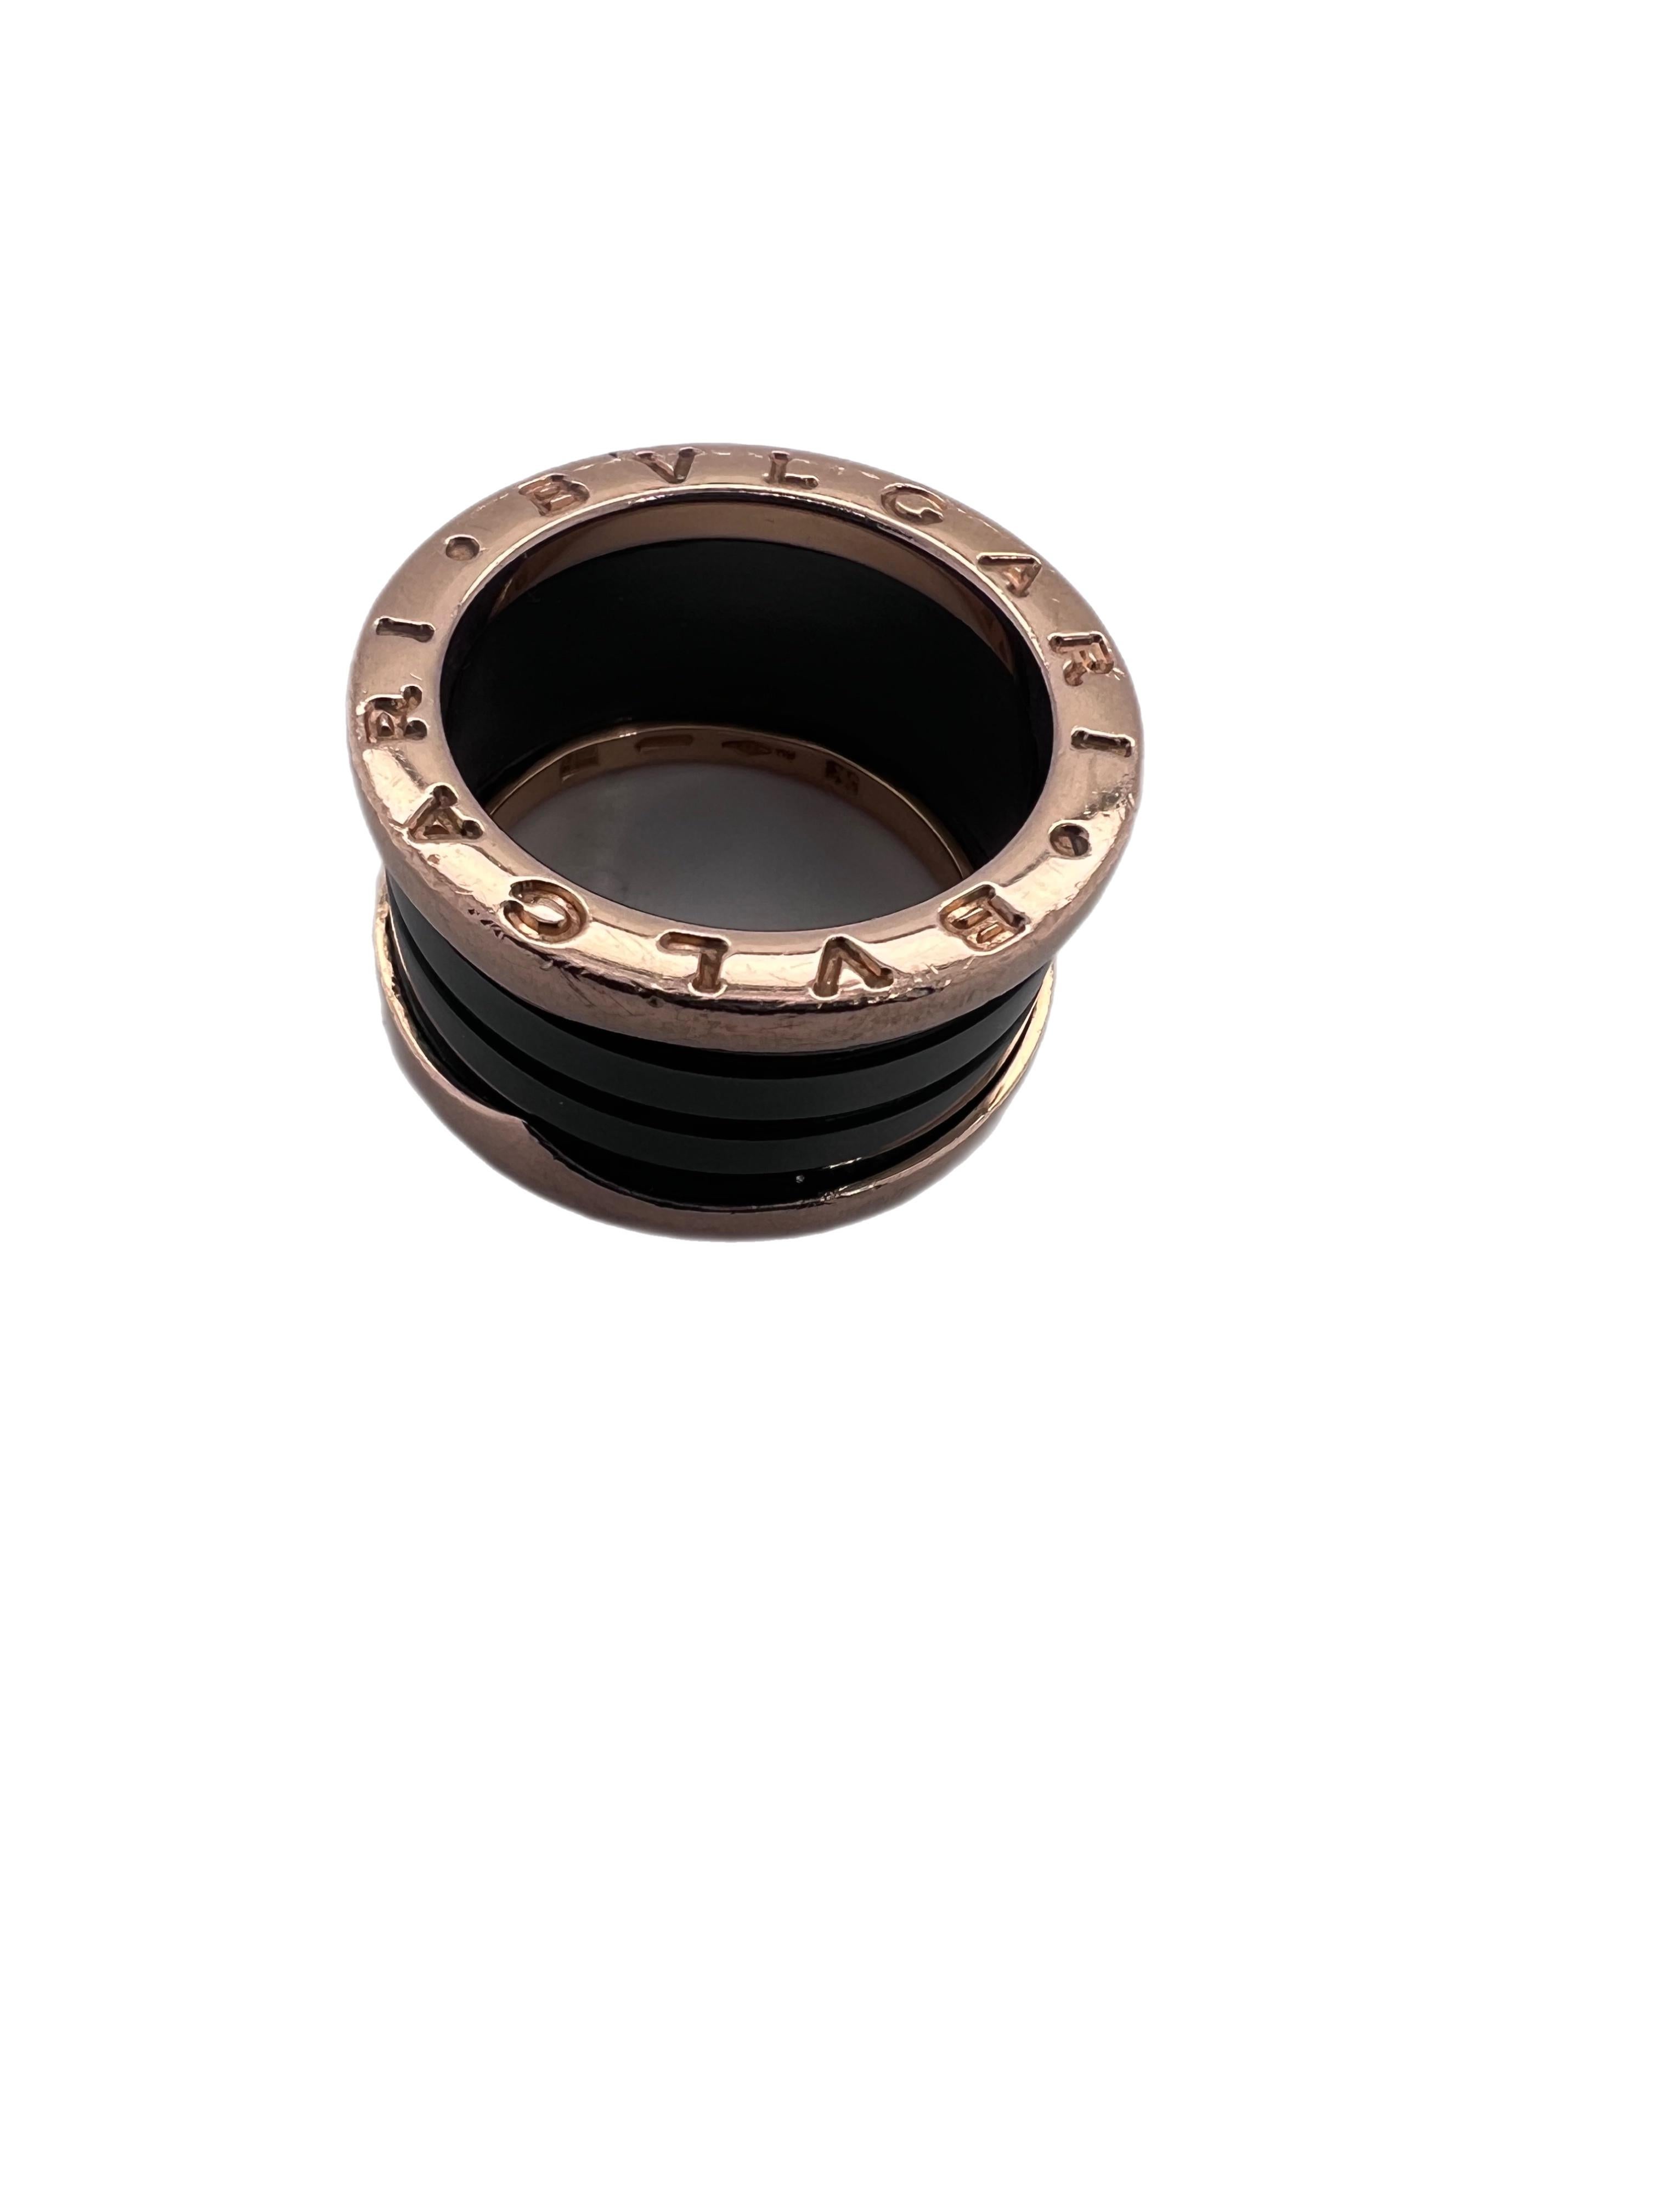 Bulgari B-Zero rose gold black ceramic ring model number 346523 In Good Condition For Sale In Addlestone, GB